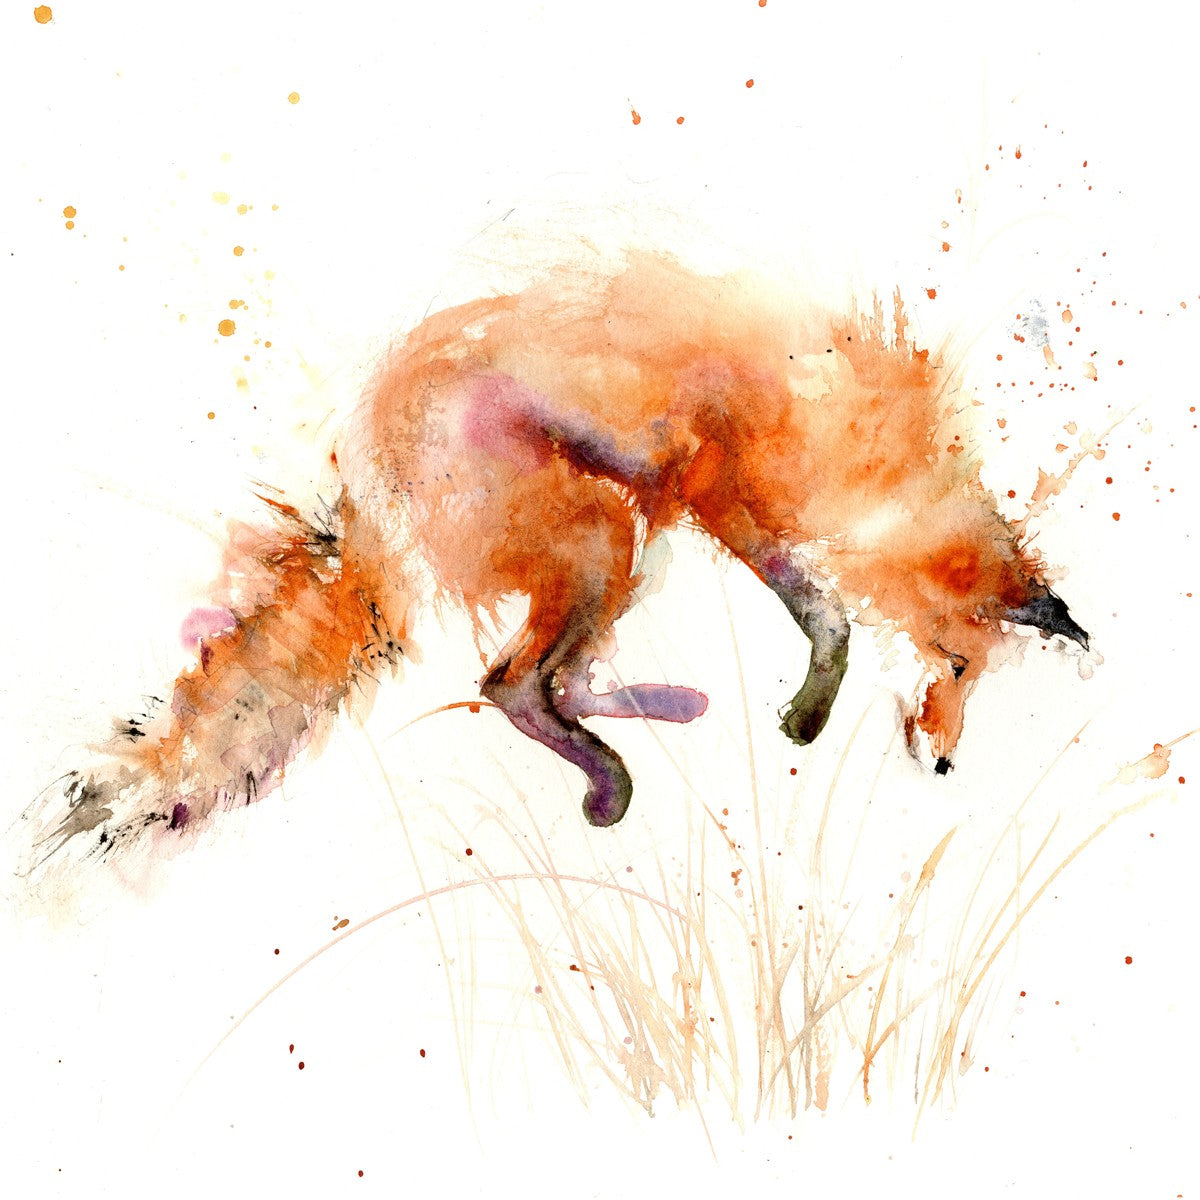 Leaping fox